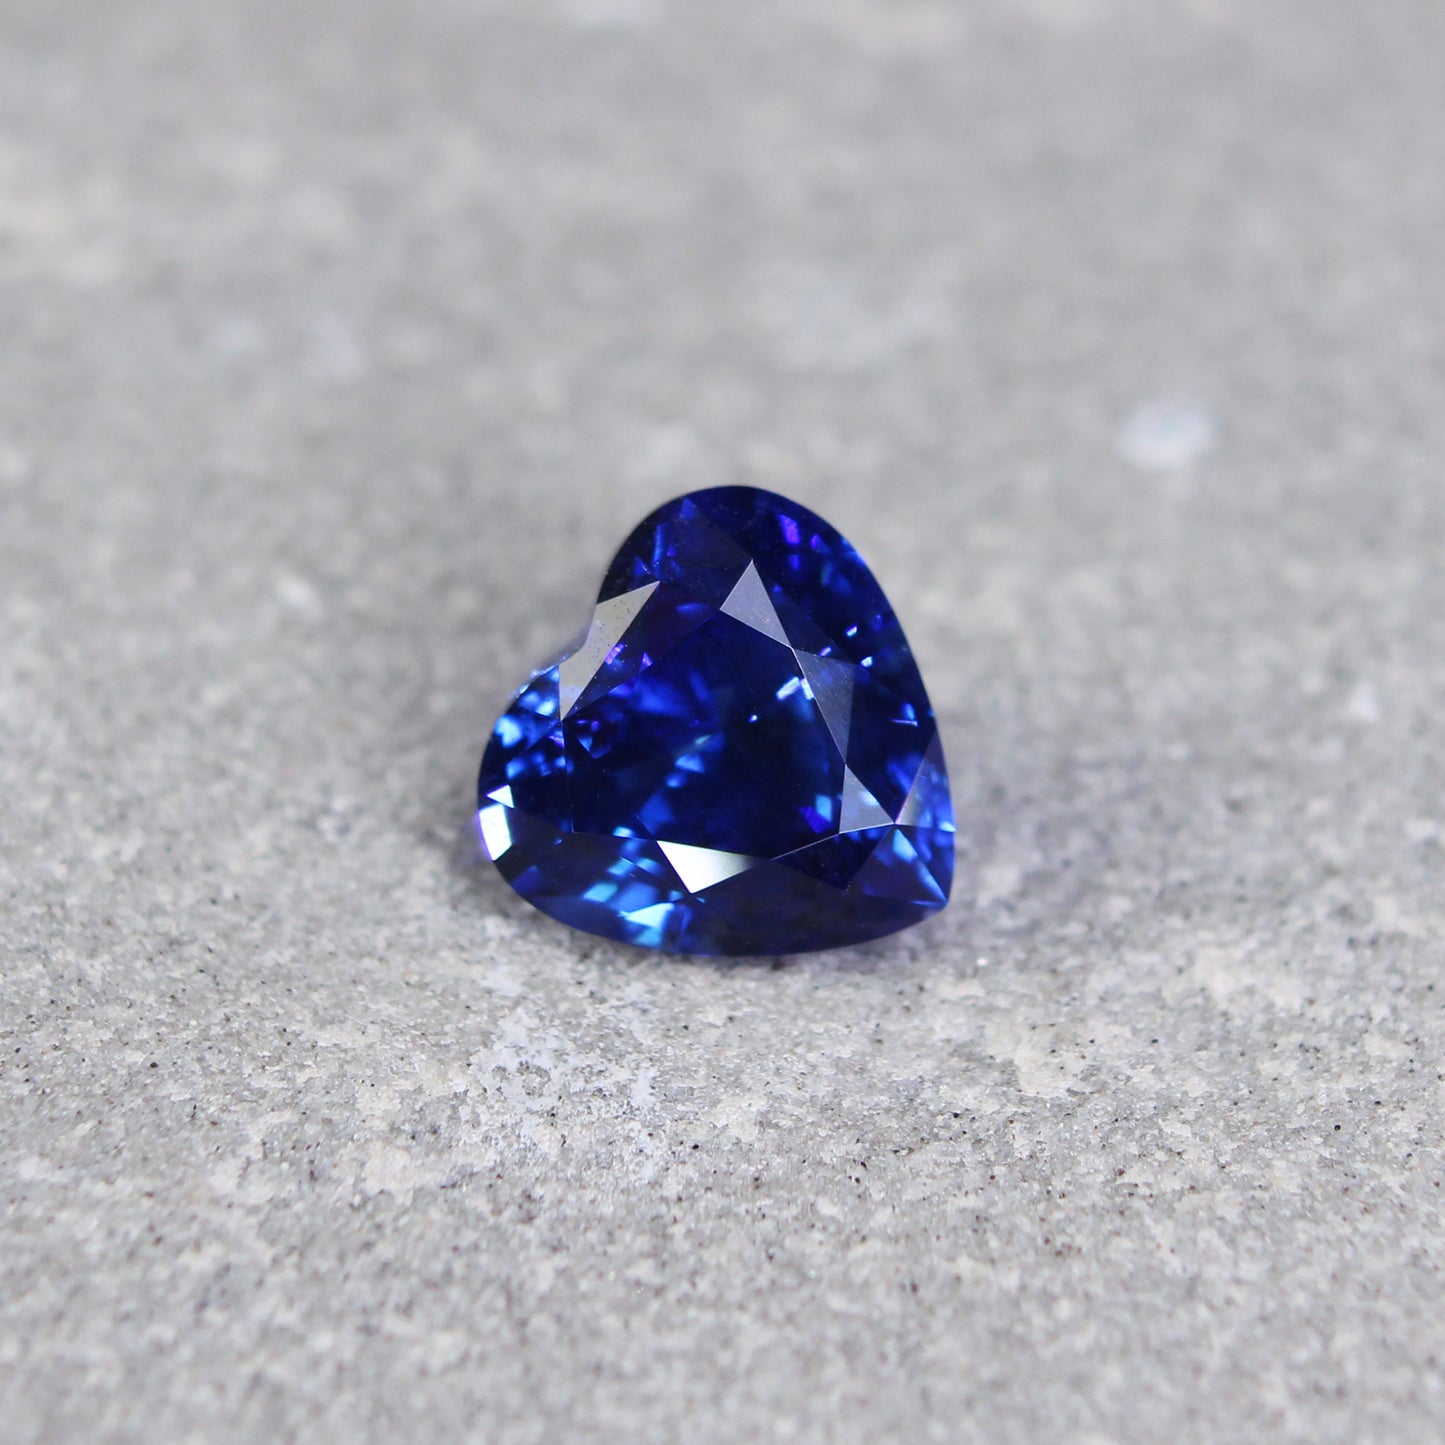 1.66ct Heart Shape Sapphire, Heated, Sri Lanka - 7.03 x 6.90 x 4.61mm